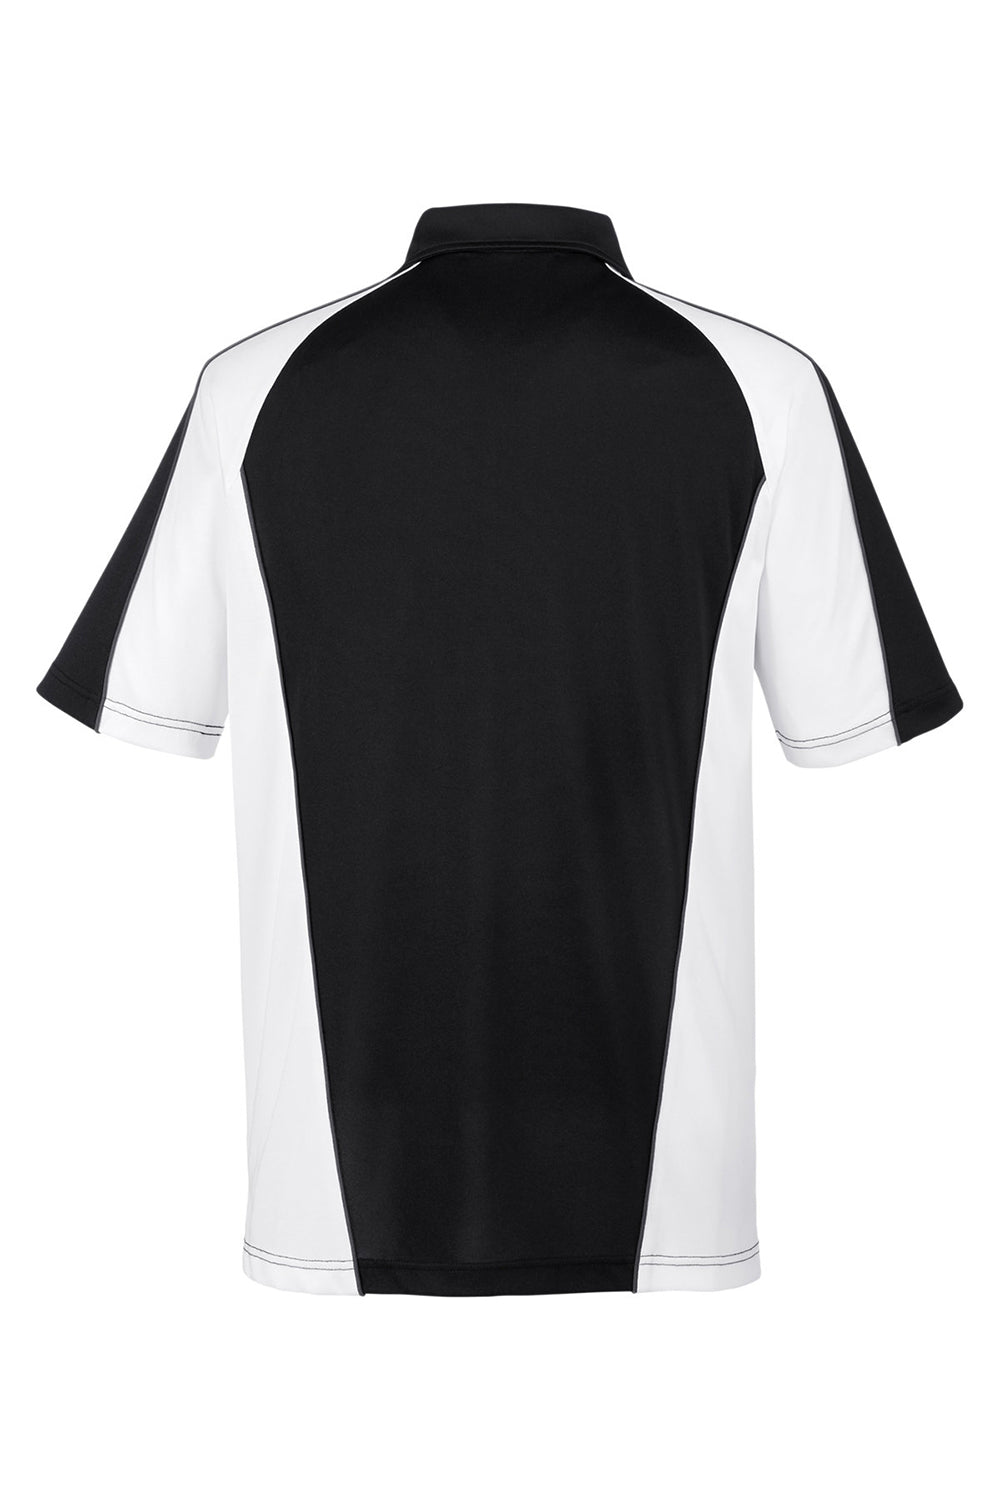 Harriton M385 Mens Advantage Performance Moisture Wicking Colorblock Short Sleeve Polo Shirt Black/White Flat Back